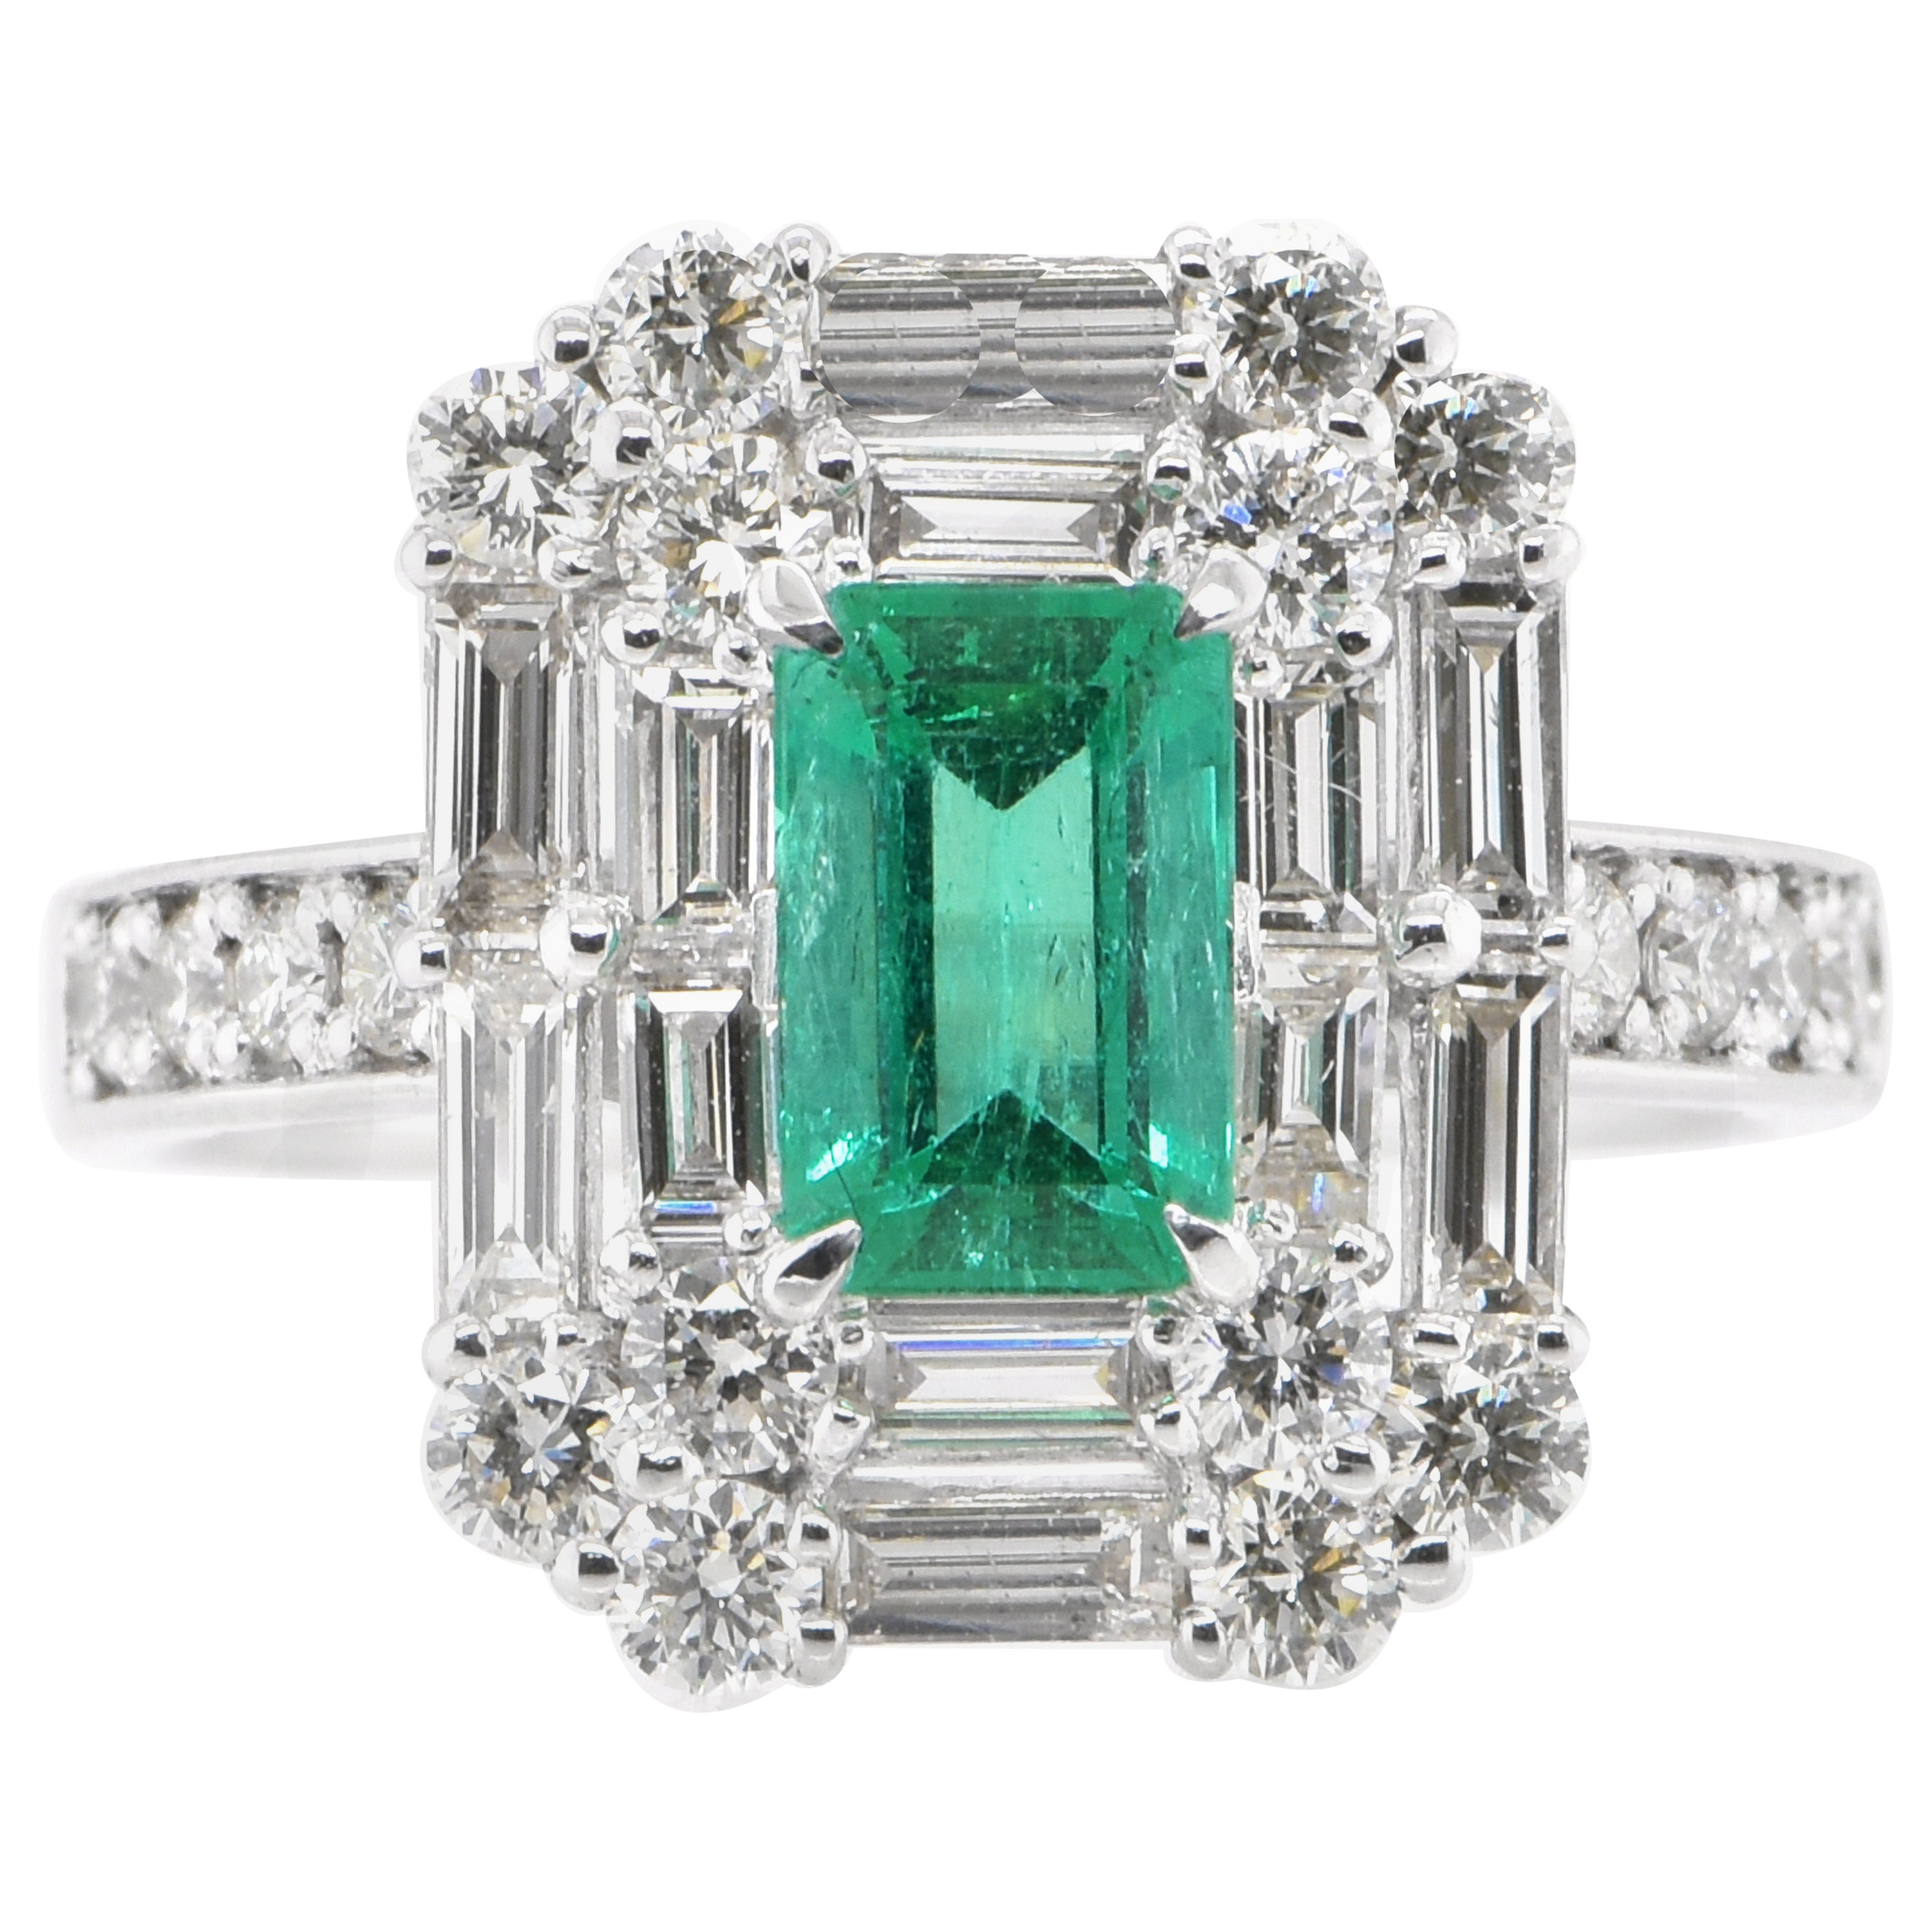 1.00 Carat Natural Emerald and Diamond Halo Cocktail Ring Set in Platinum